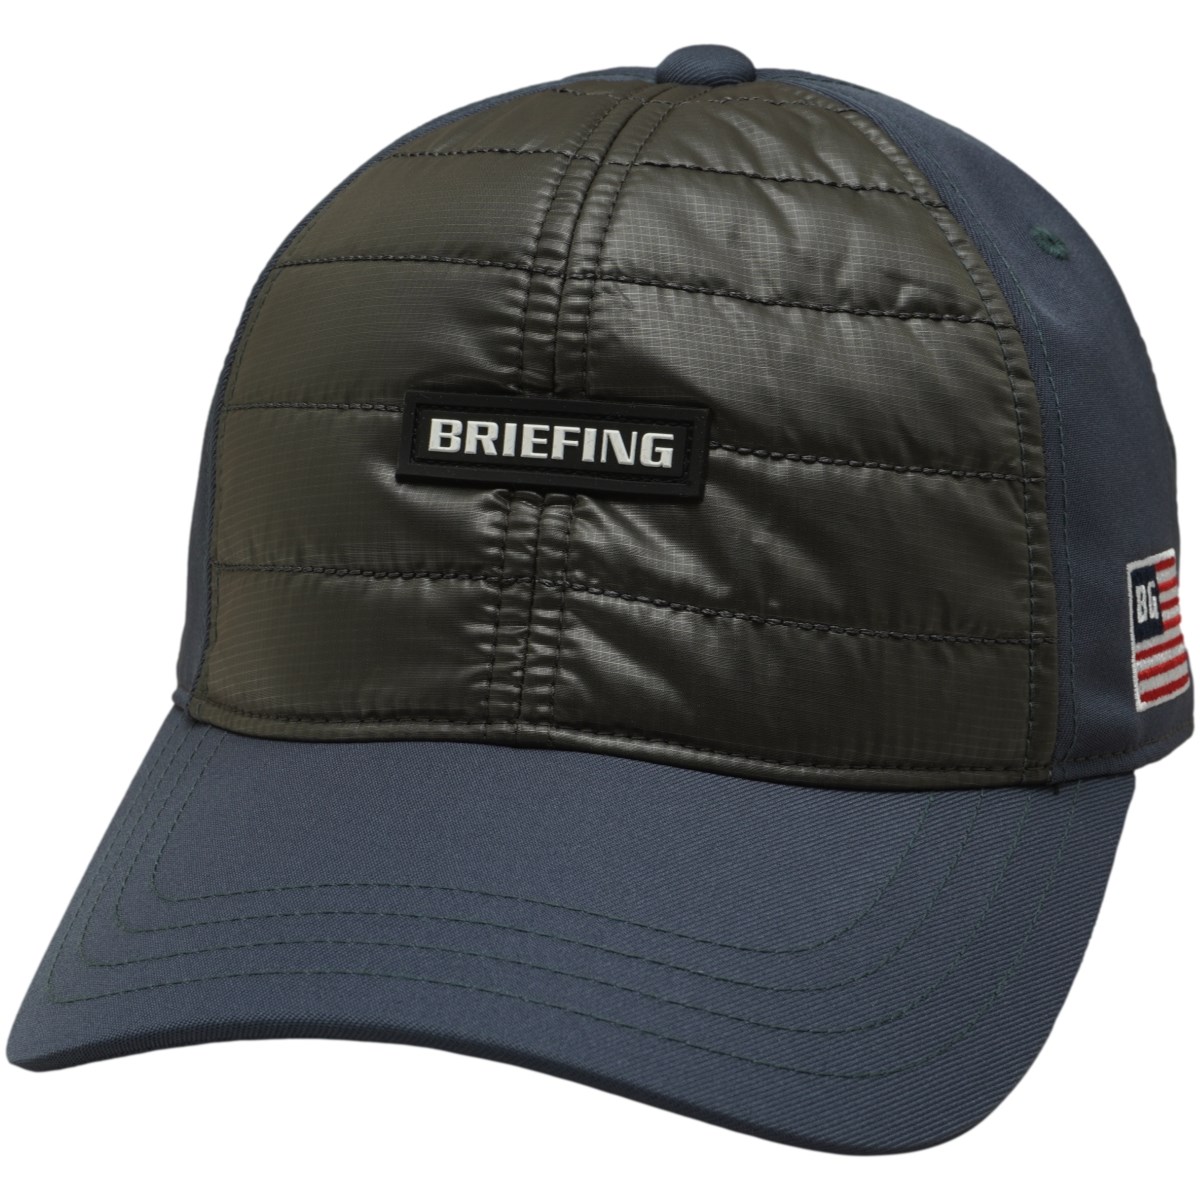 windandsea briefing コラボ バケットハット - 帽子